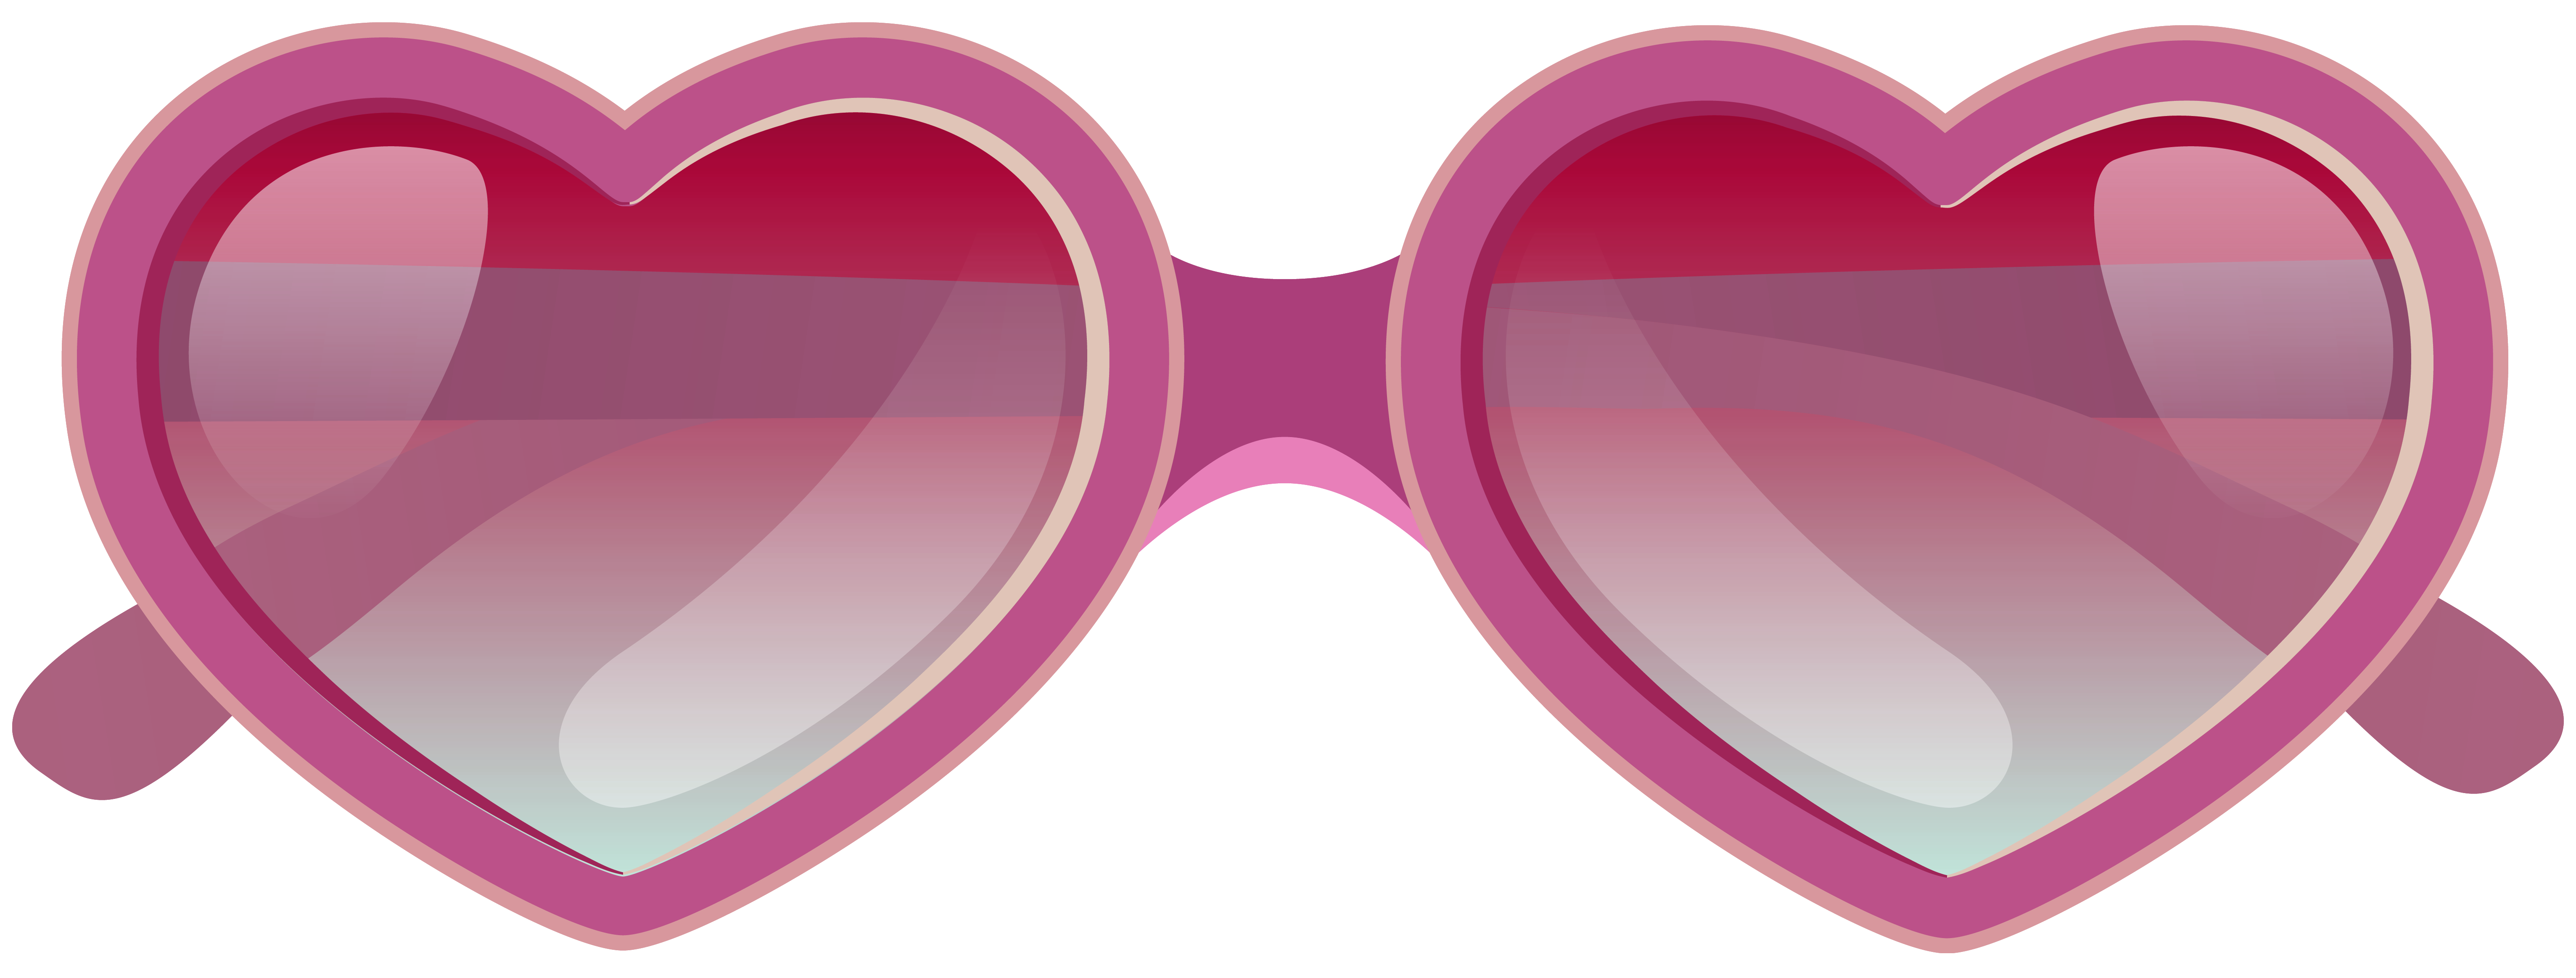 Aviator sunglasses Clip art - Pink Heart Sunglasses PNG Clipart Image ...